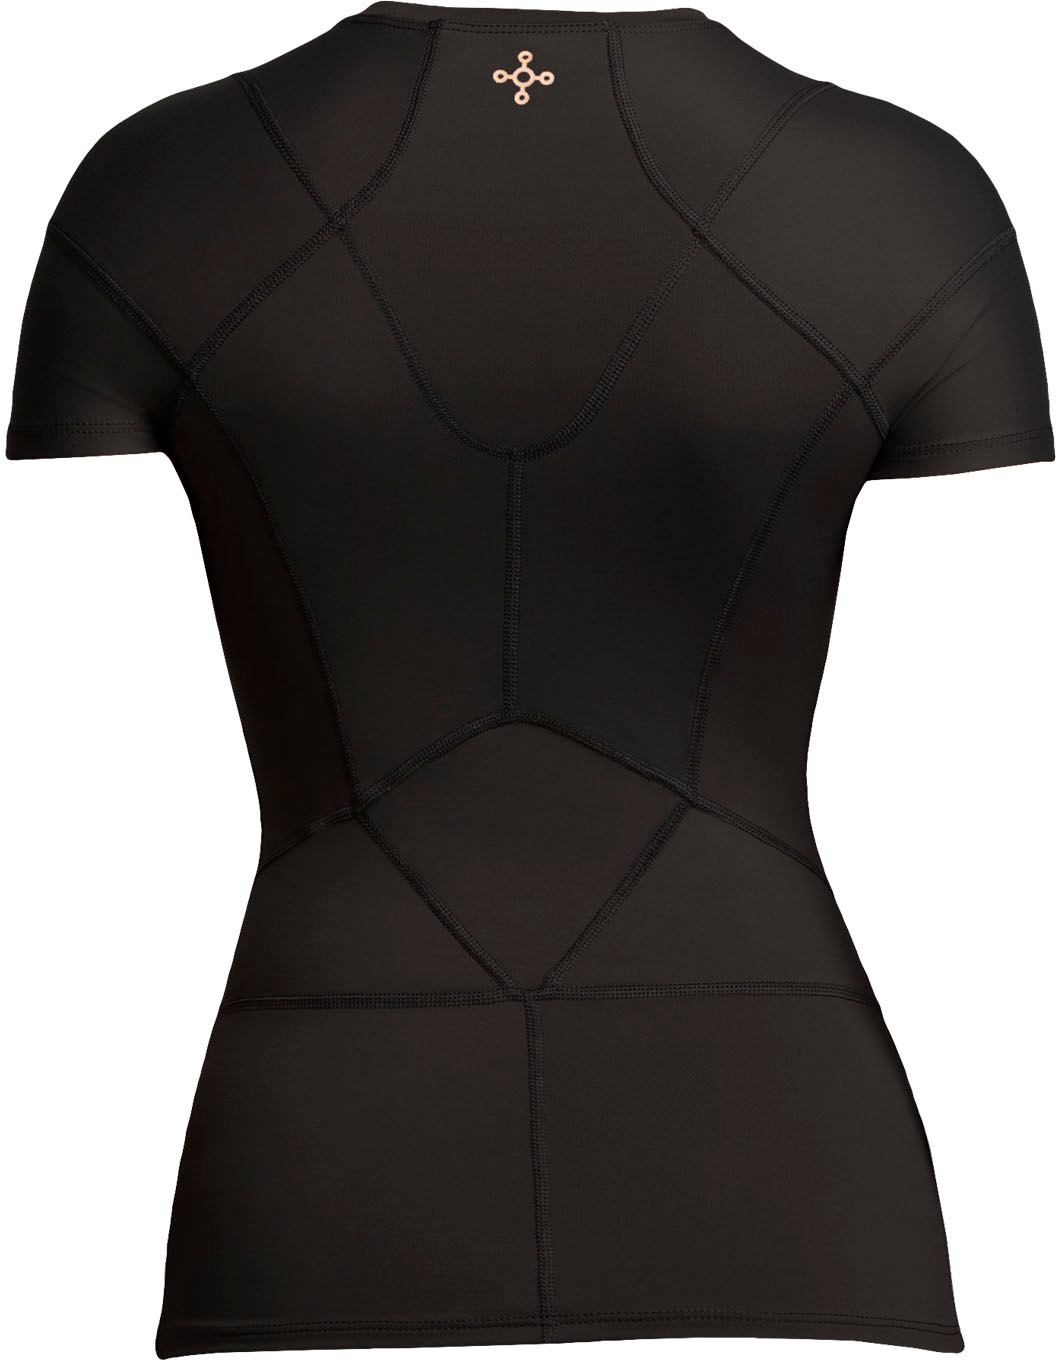 Tommie Copper Women's Short Sleeve Shoulder Shirt Black 0977WR-0101-05 -  Best Buy